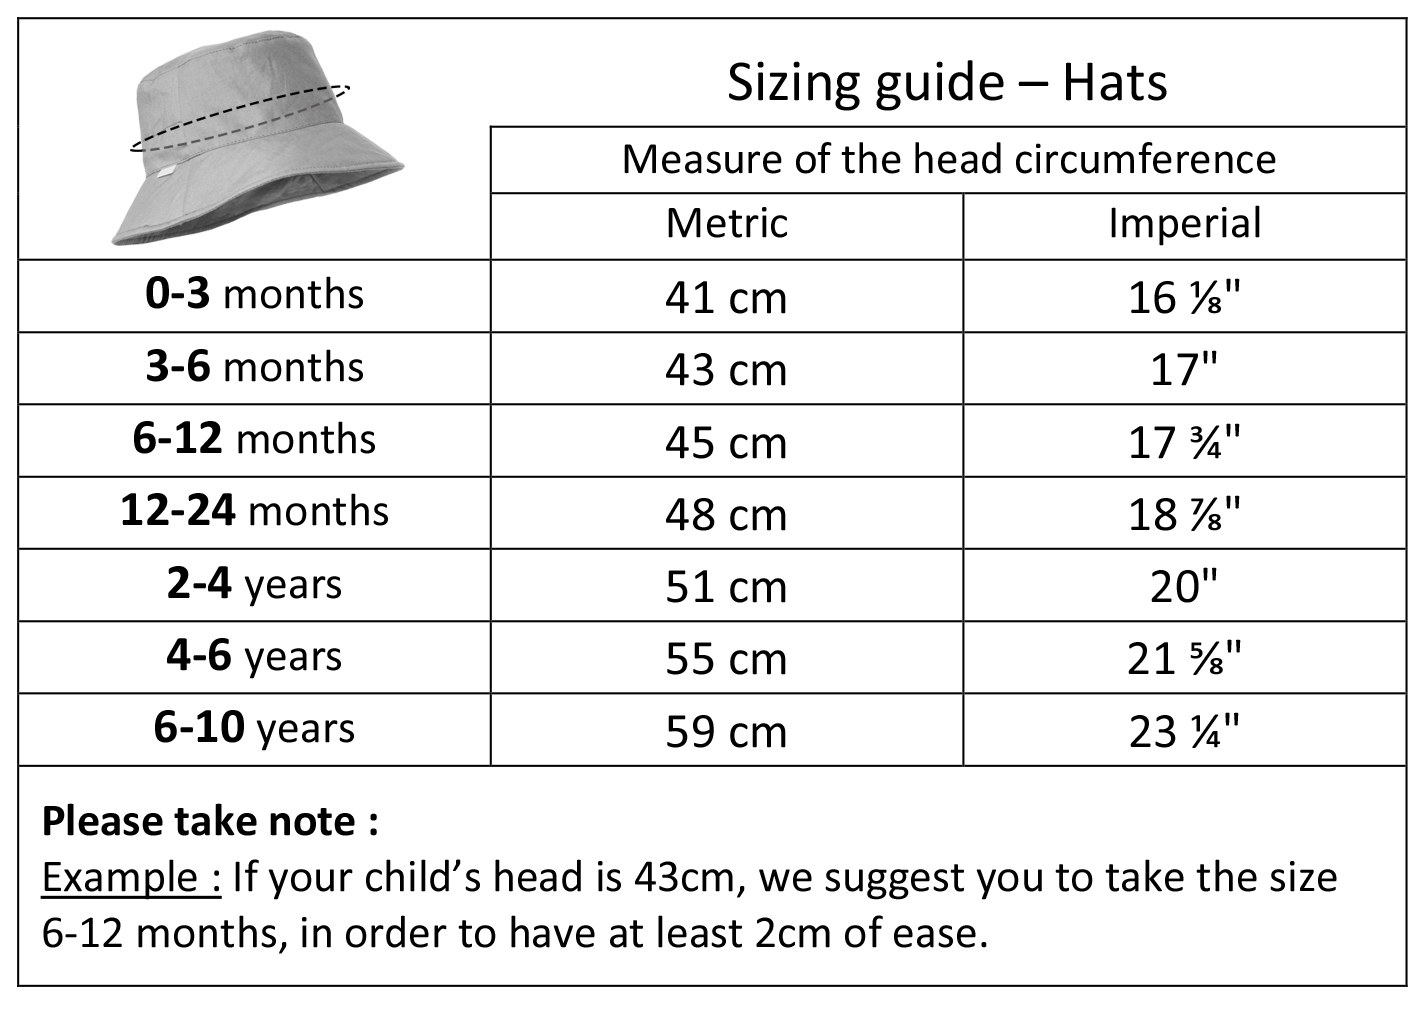 Bucket hat : offers UPF 50+ sun protection